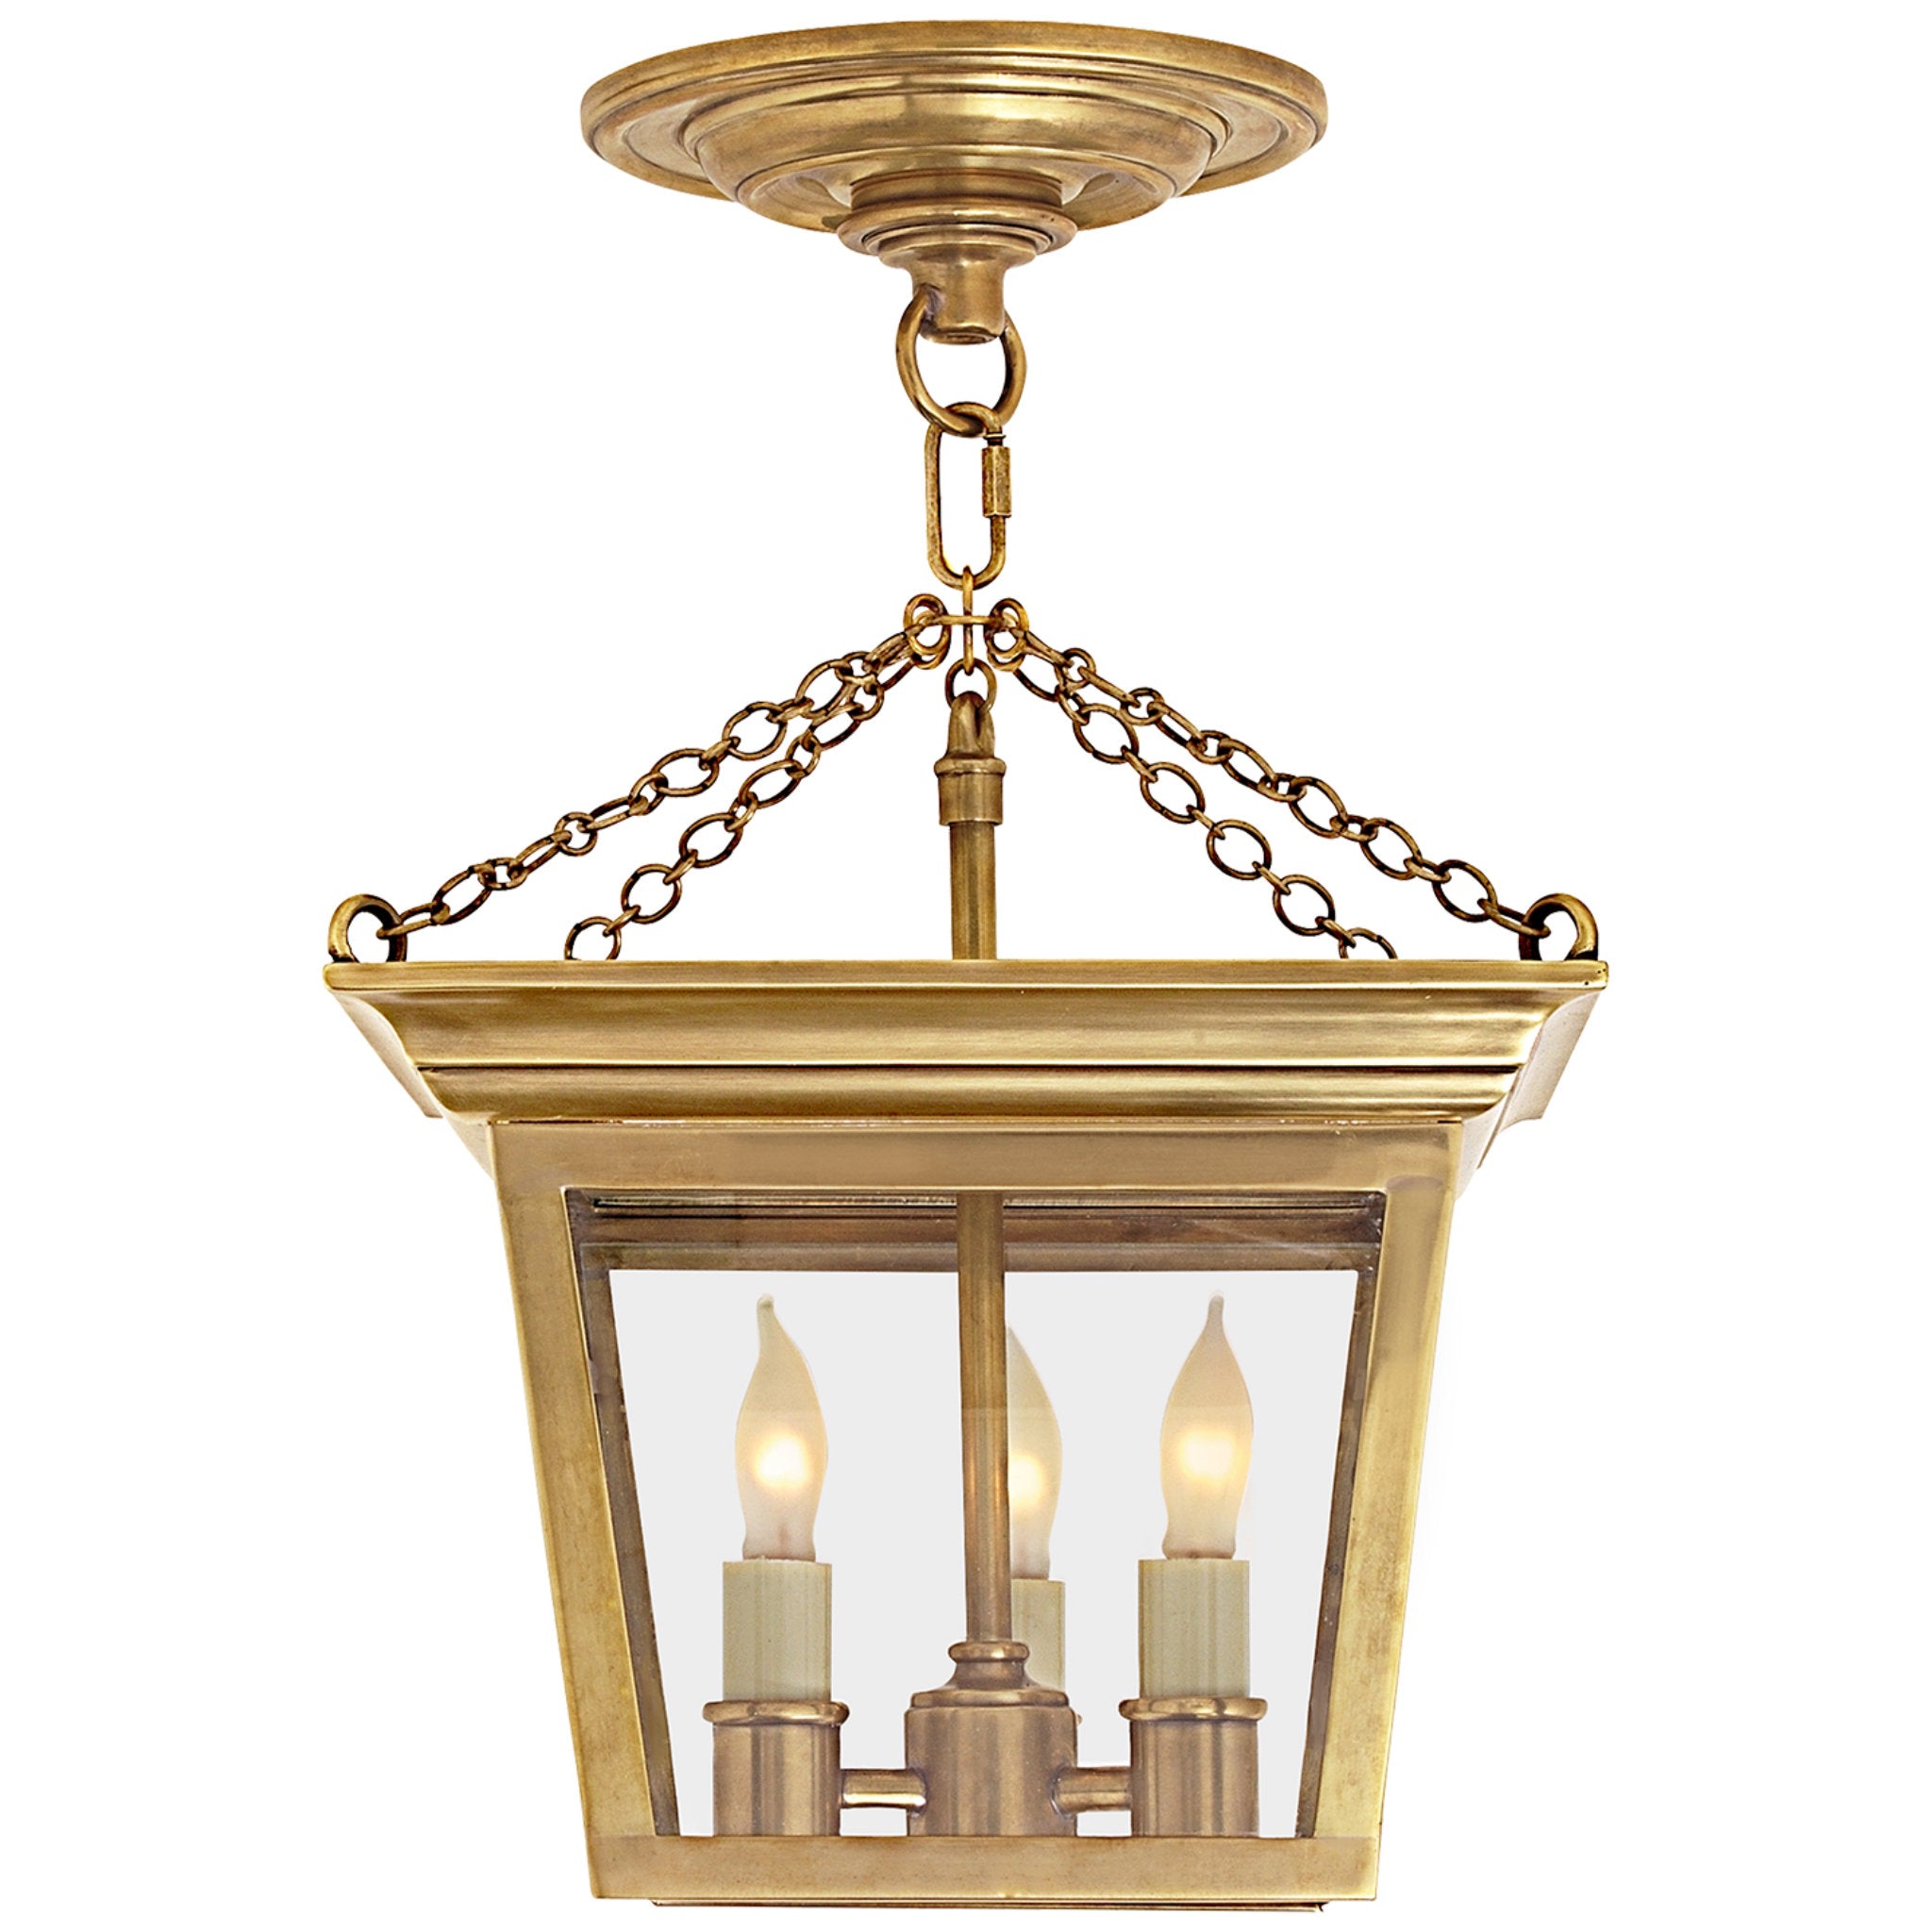 Chapman & Myers Cornice Semi-Flush Lantern in Hand-Rubbed Antique Brass